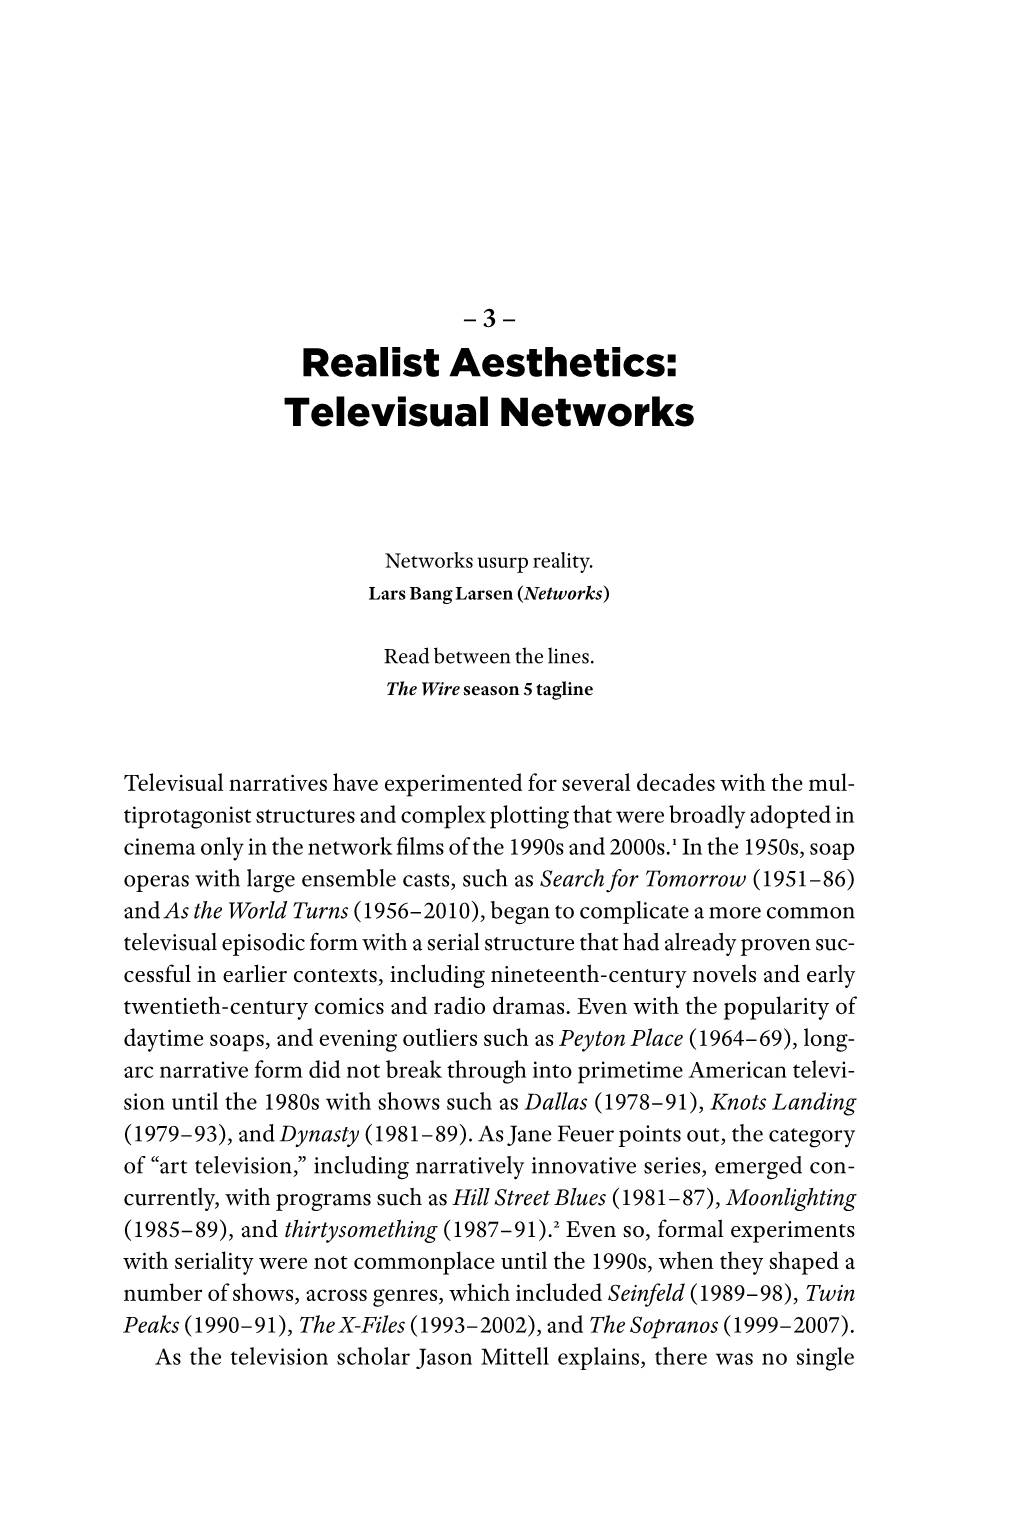 Realist Aesthetics: Televisual Networks